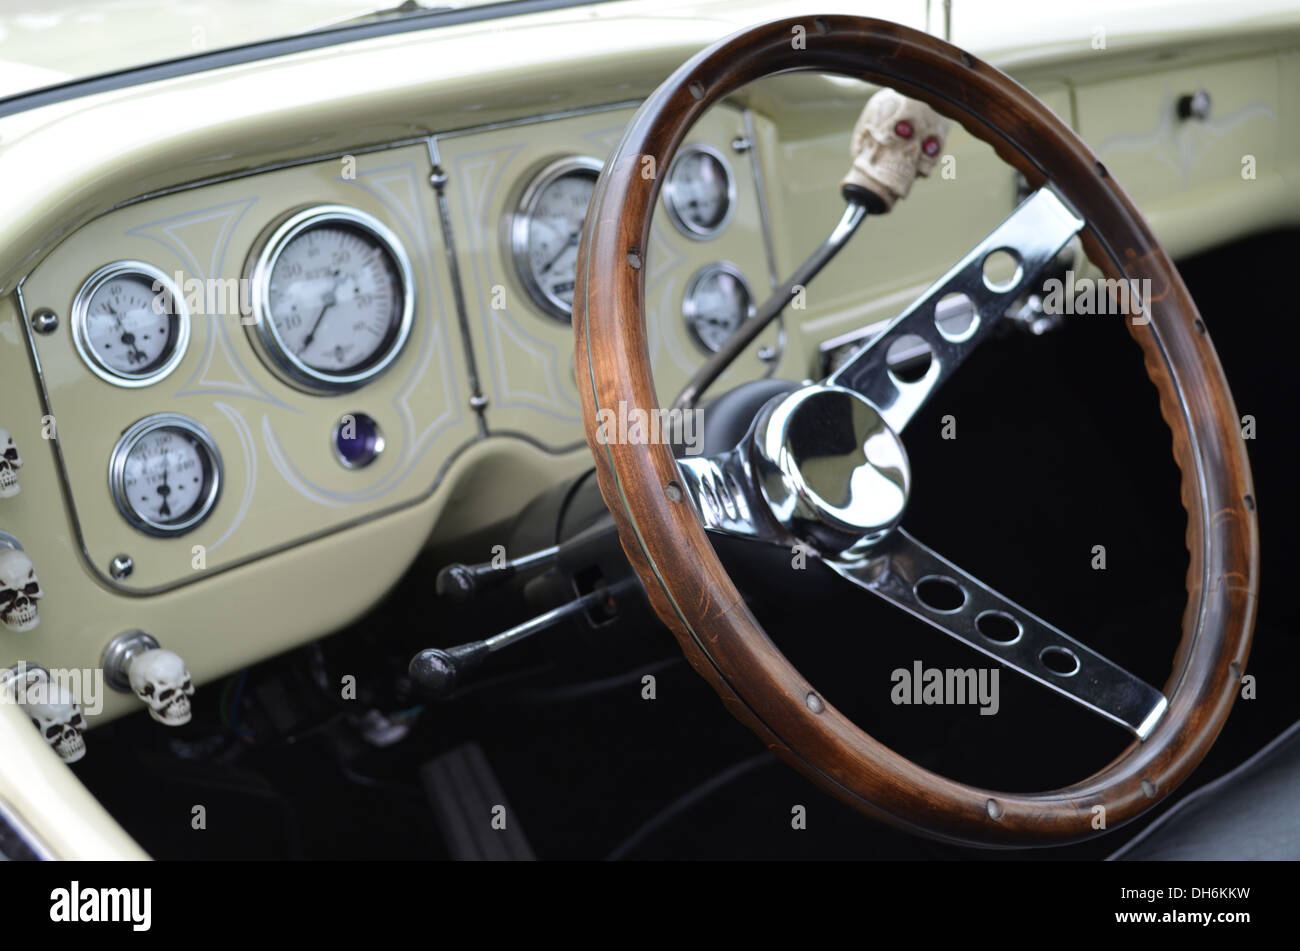 custom car interior Stock Photo - Alamy